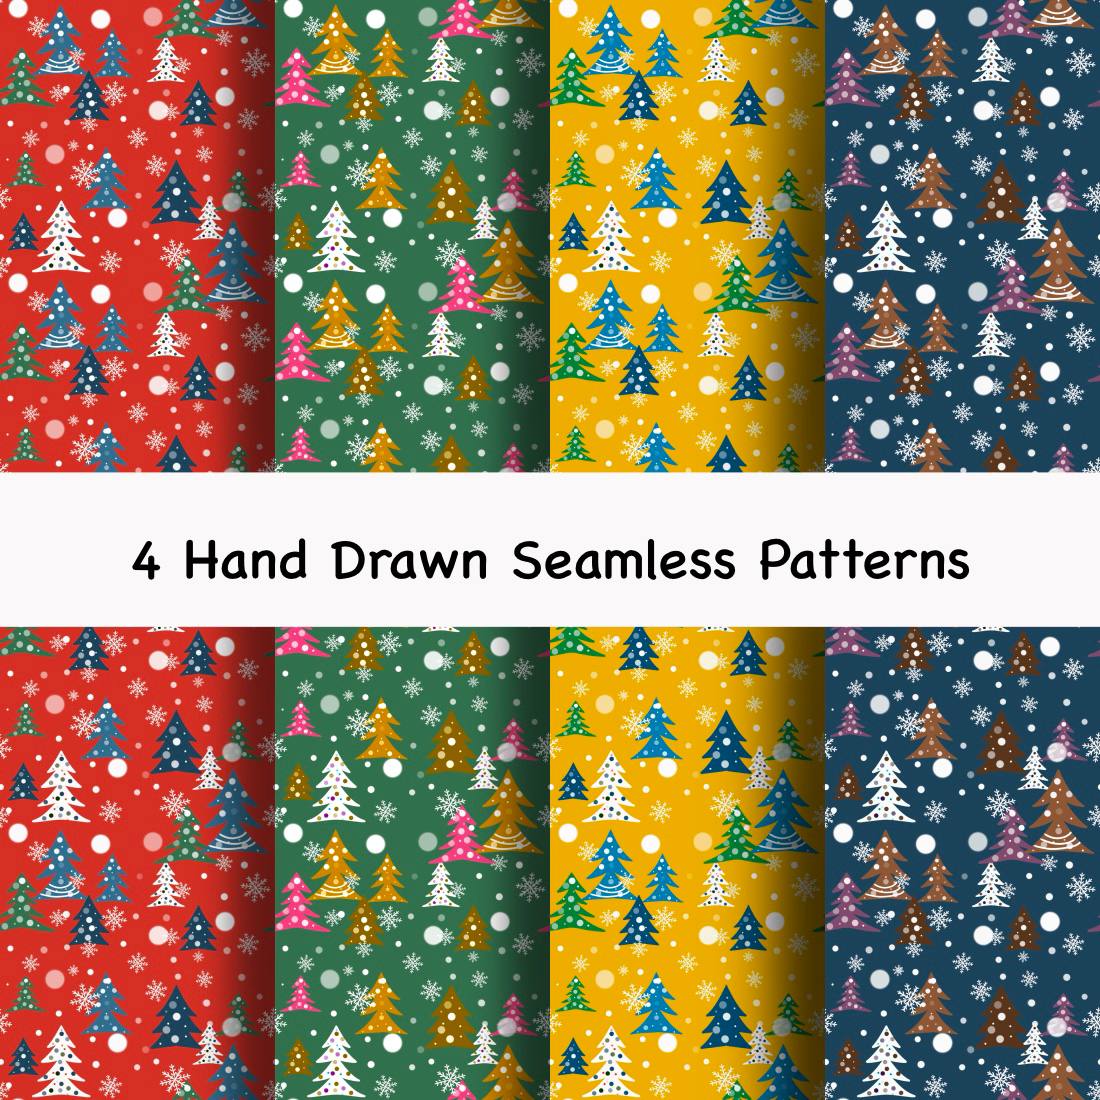 4 Seamless Hand Drawn Patterns Christmas trees herringbone cover image.